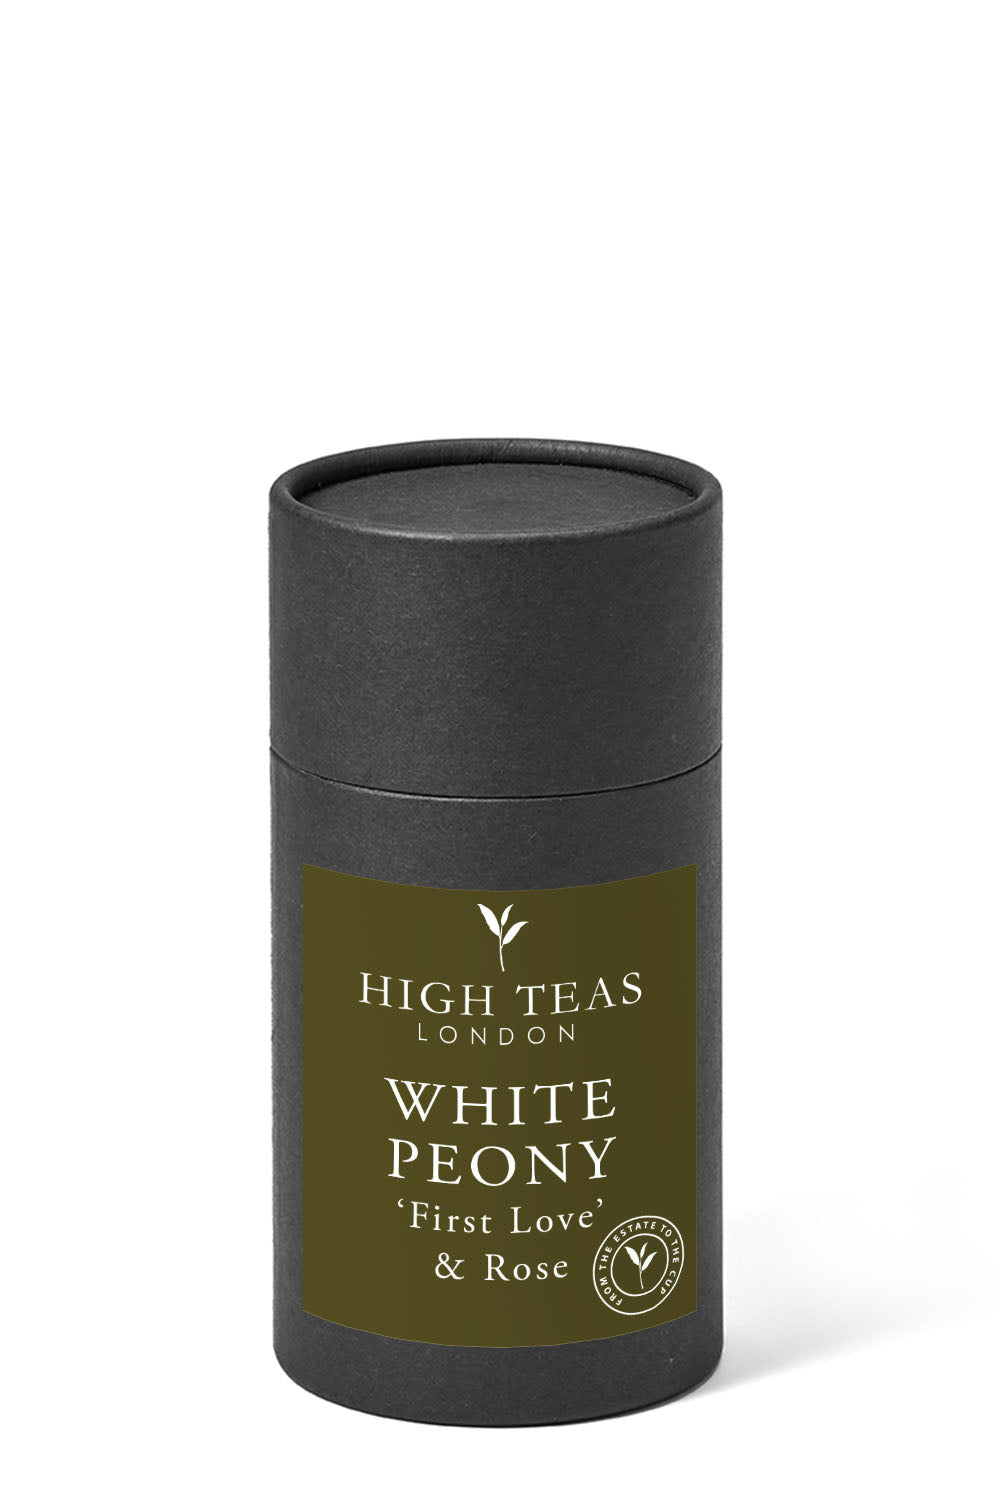 White Peony with Rose Petals aka First Love-60g gift-Loose Leaf Tea-High Teas